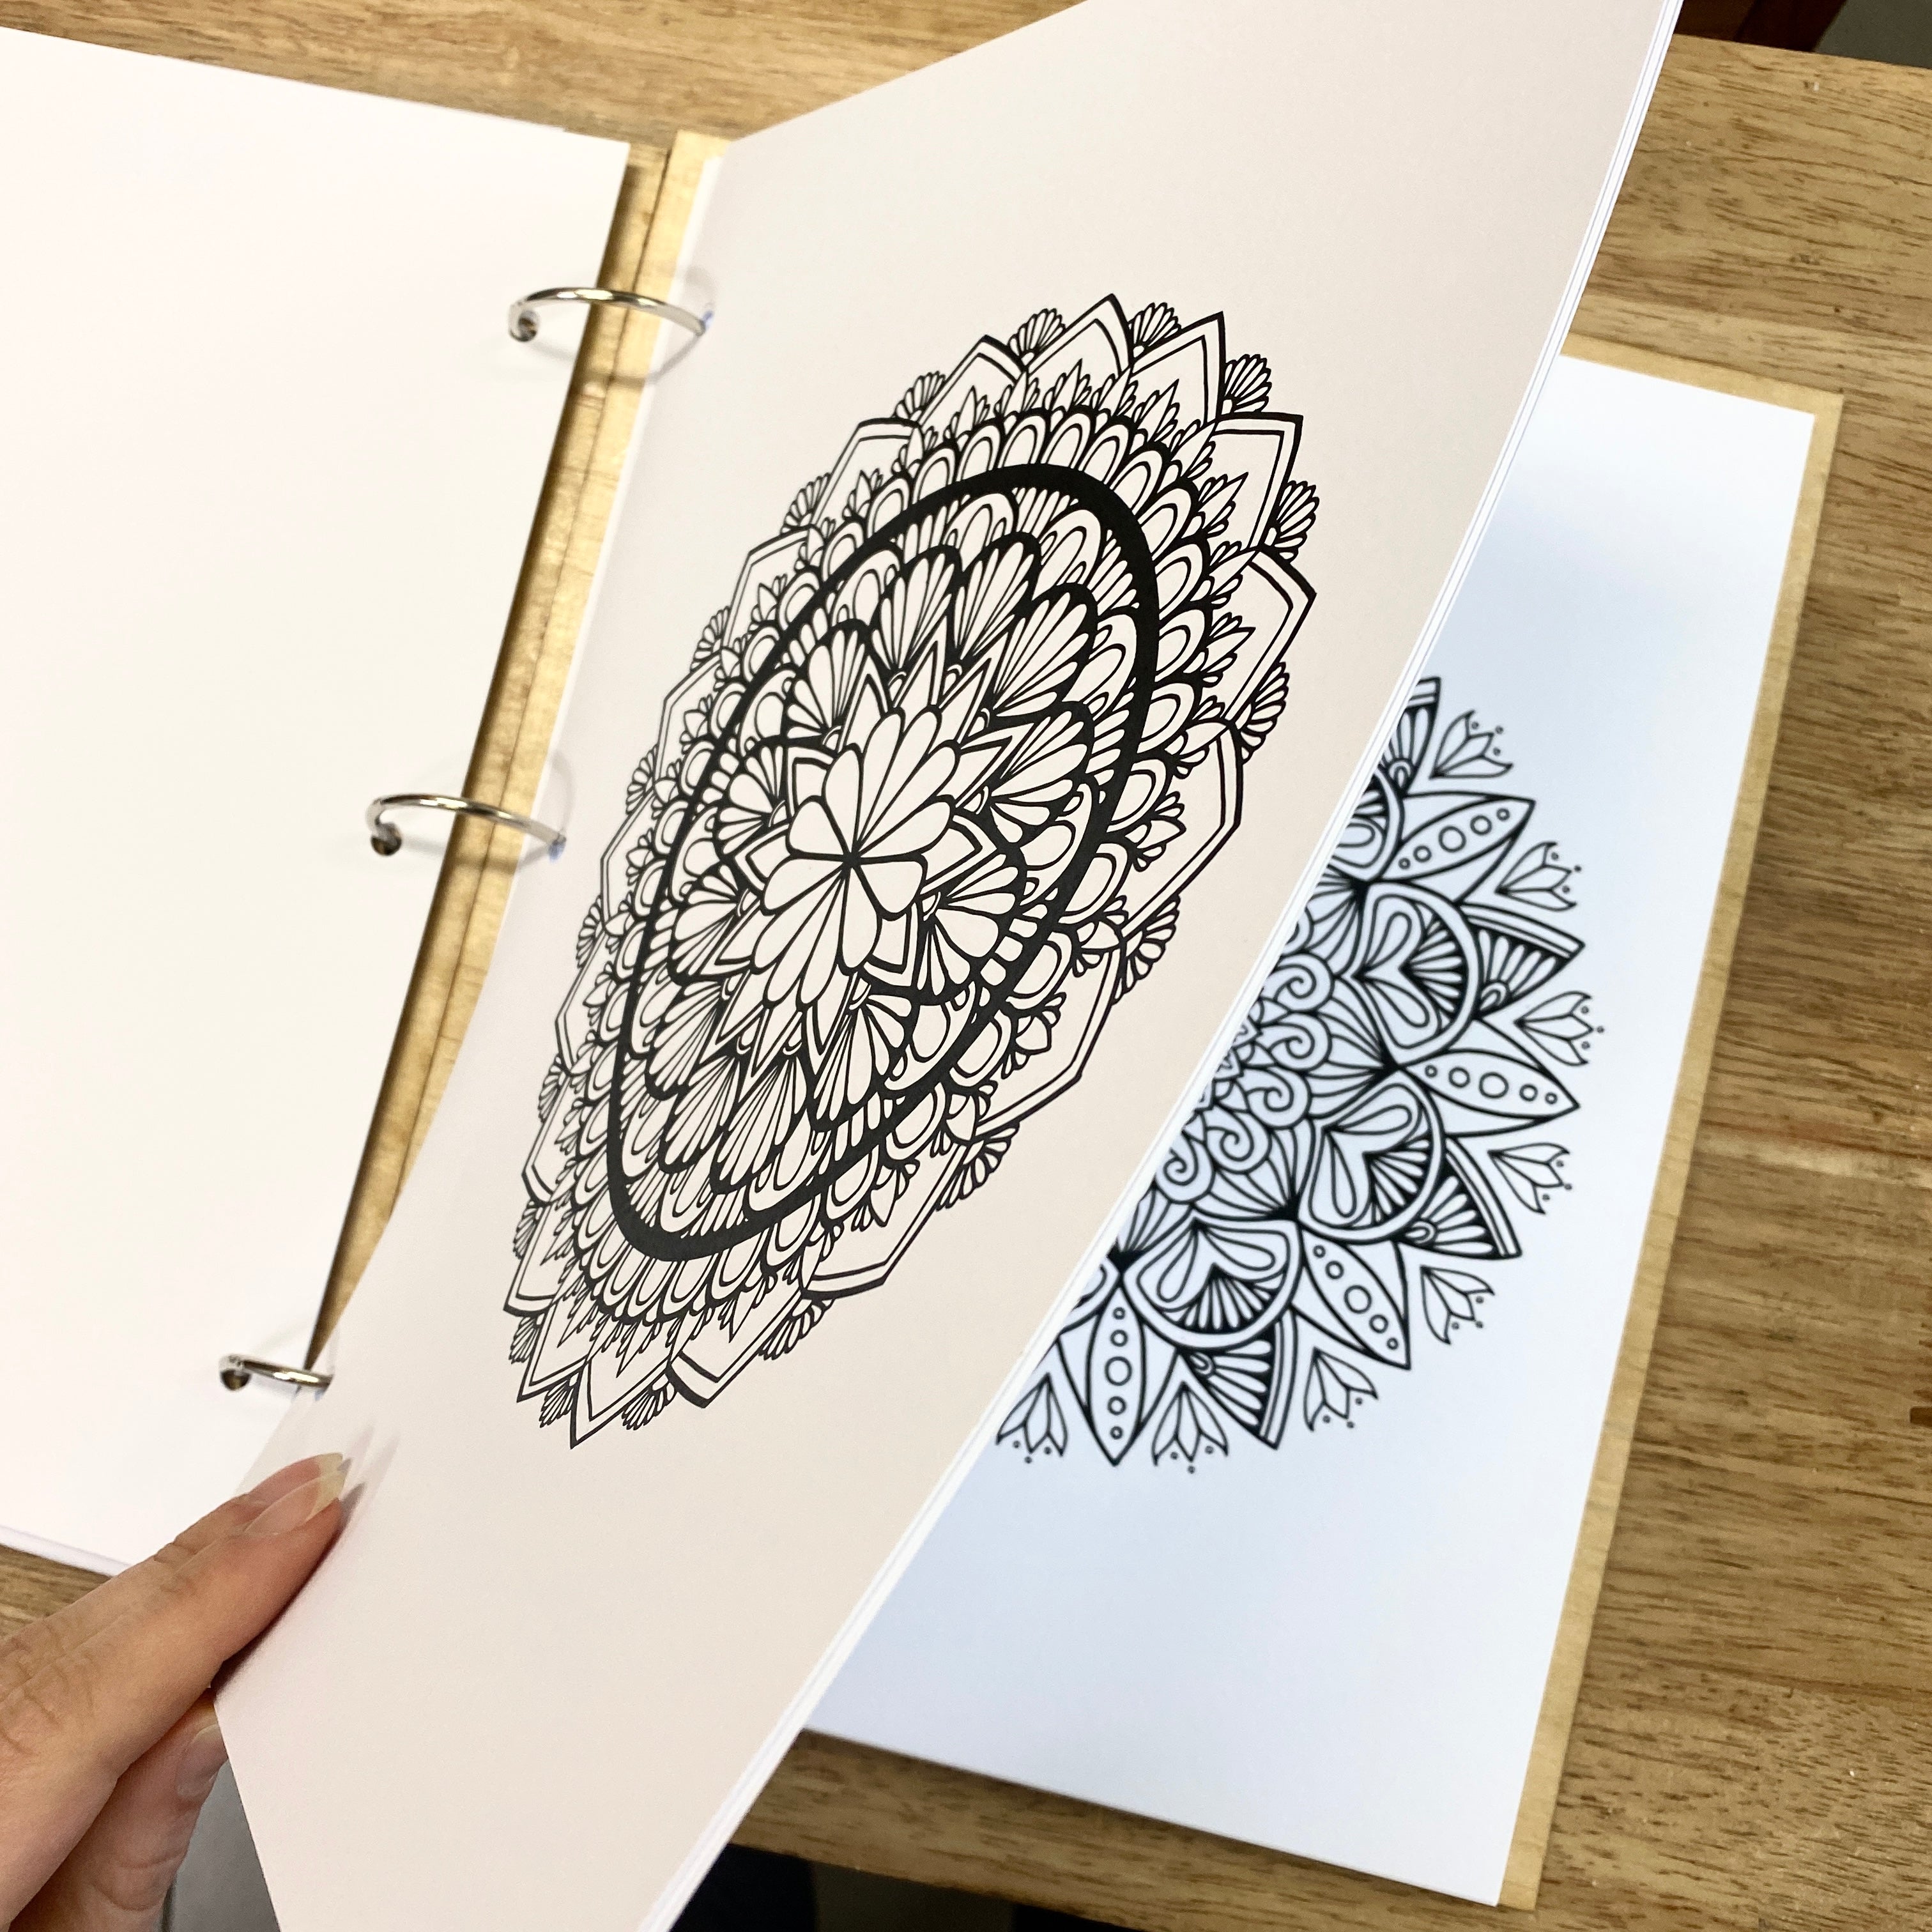 Wooden Mandala Colouring Book - Hand Made